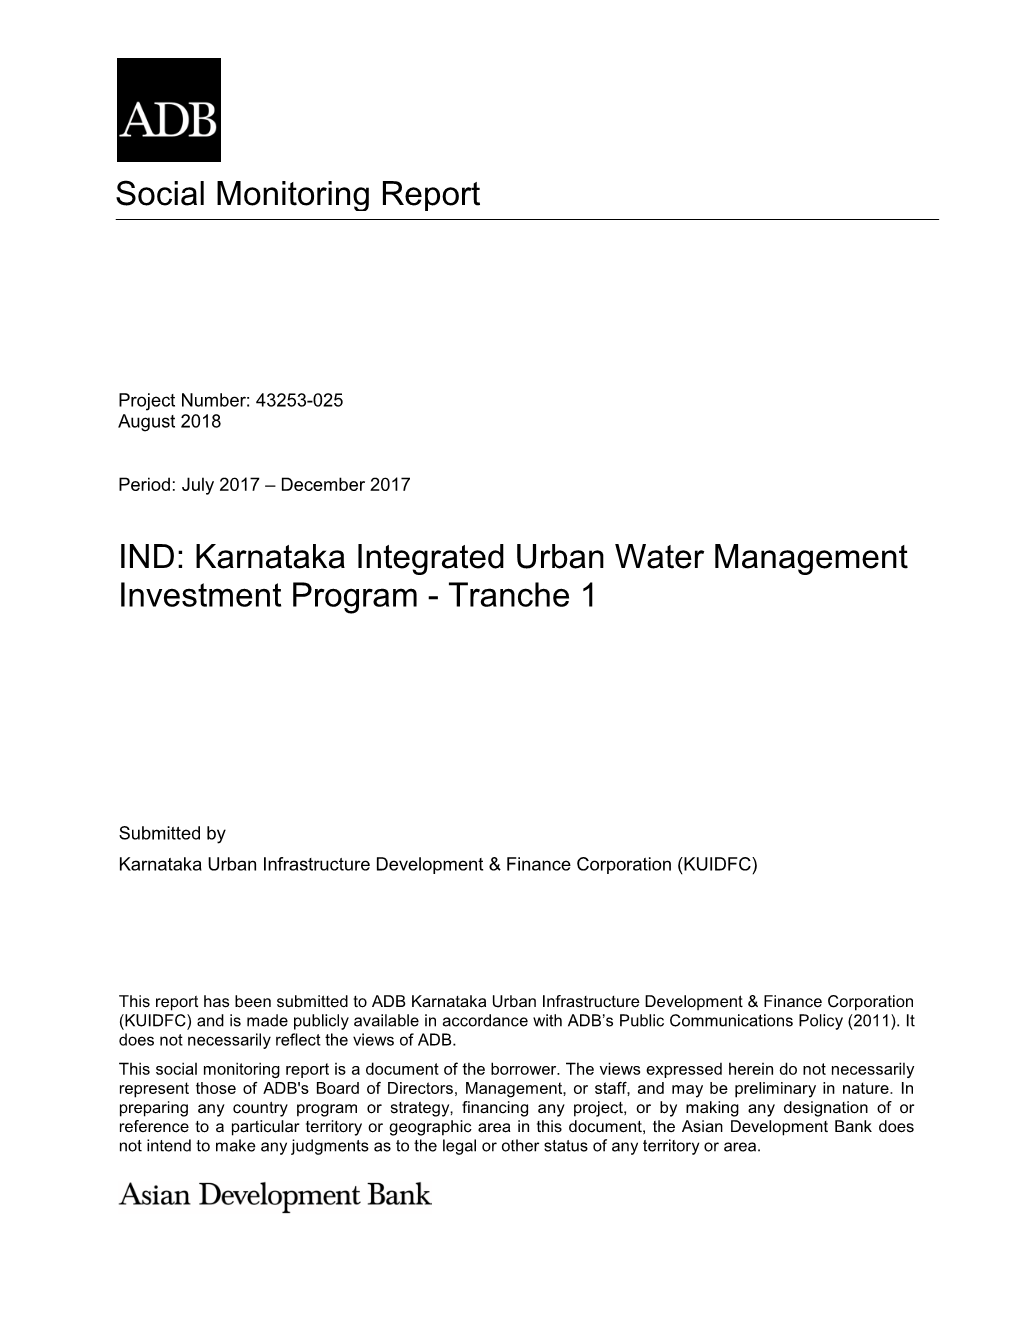 43253-025: Karnataka Integrated Urban